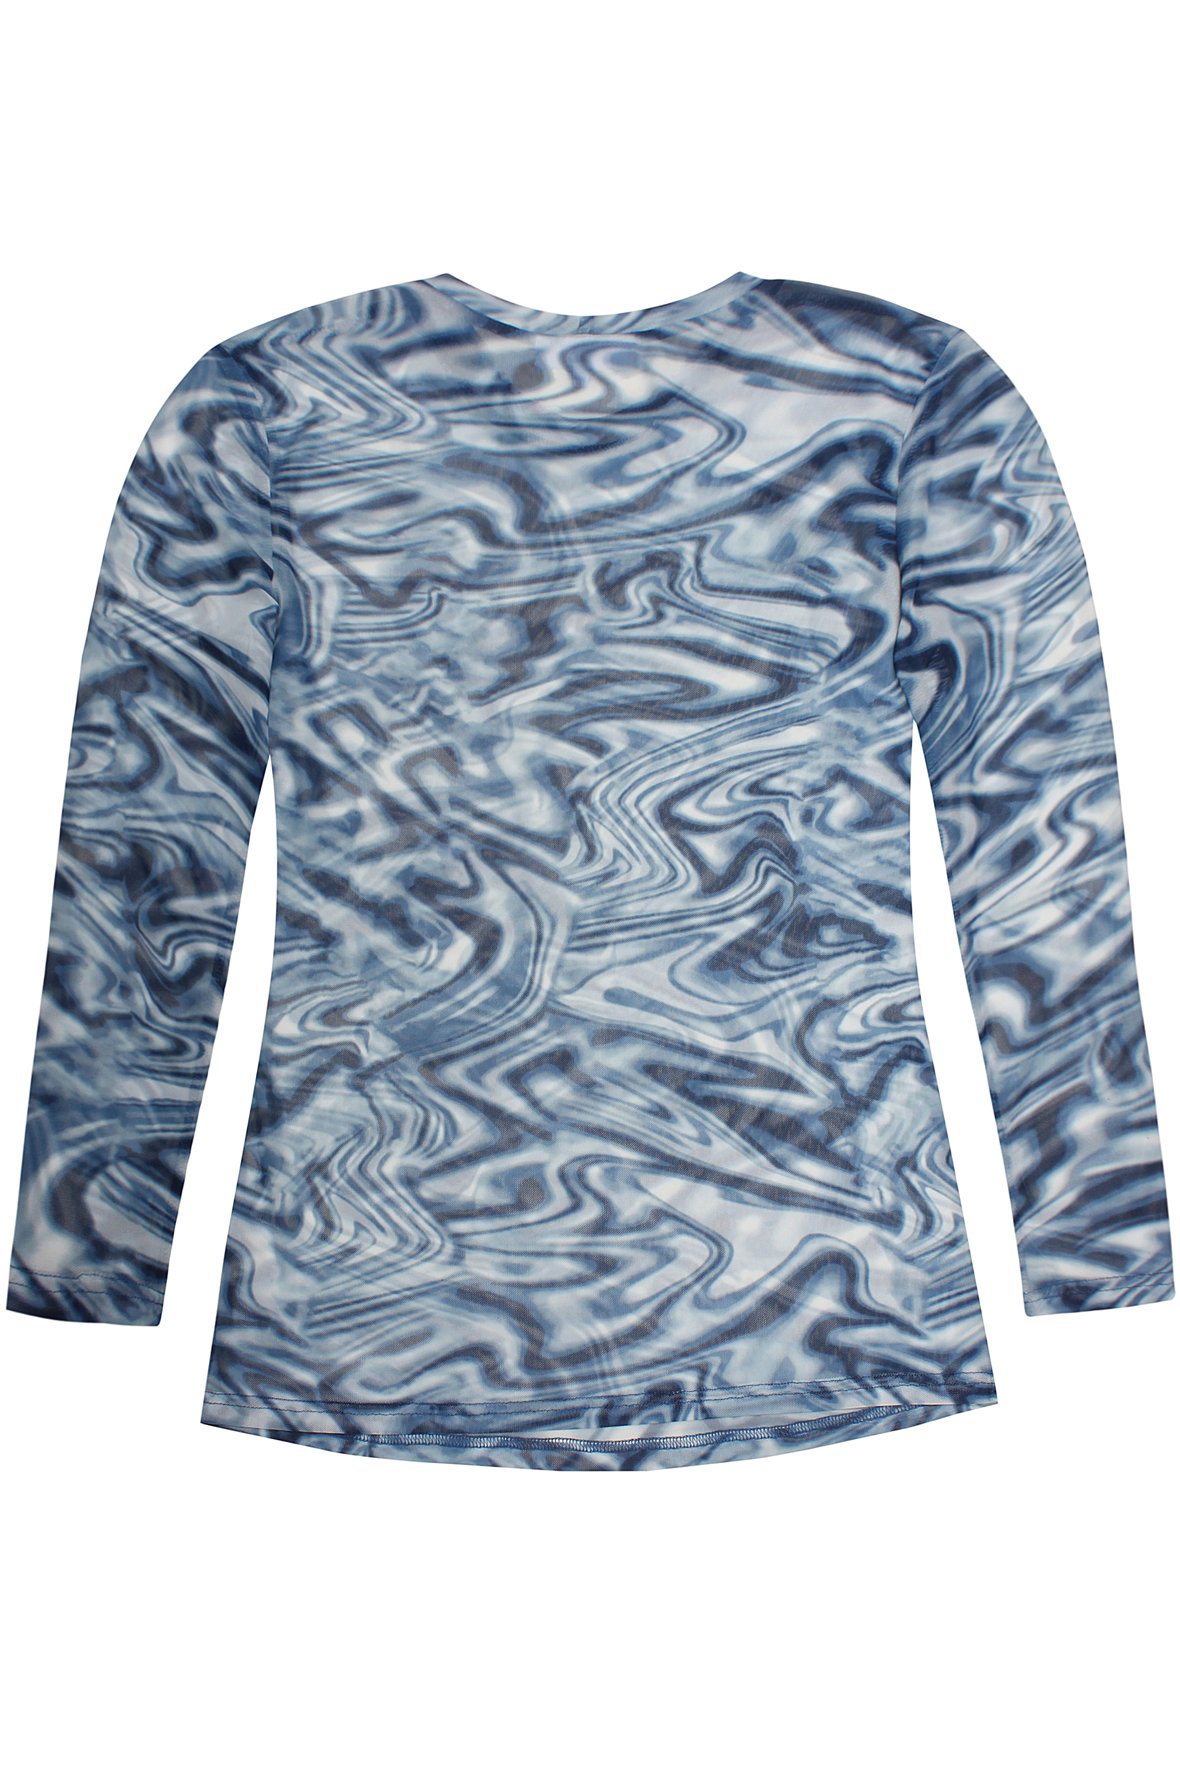 servitrice Korrespondance smøre Zhenzi Grace 582 blå er en mesh bluse der sidder til - plus size - Hos Lohse